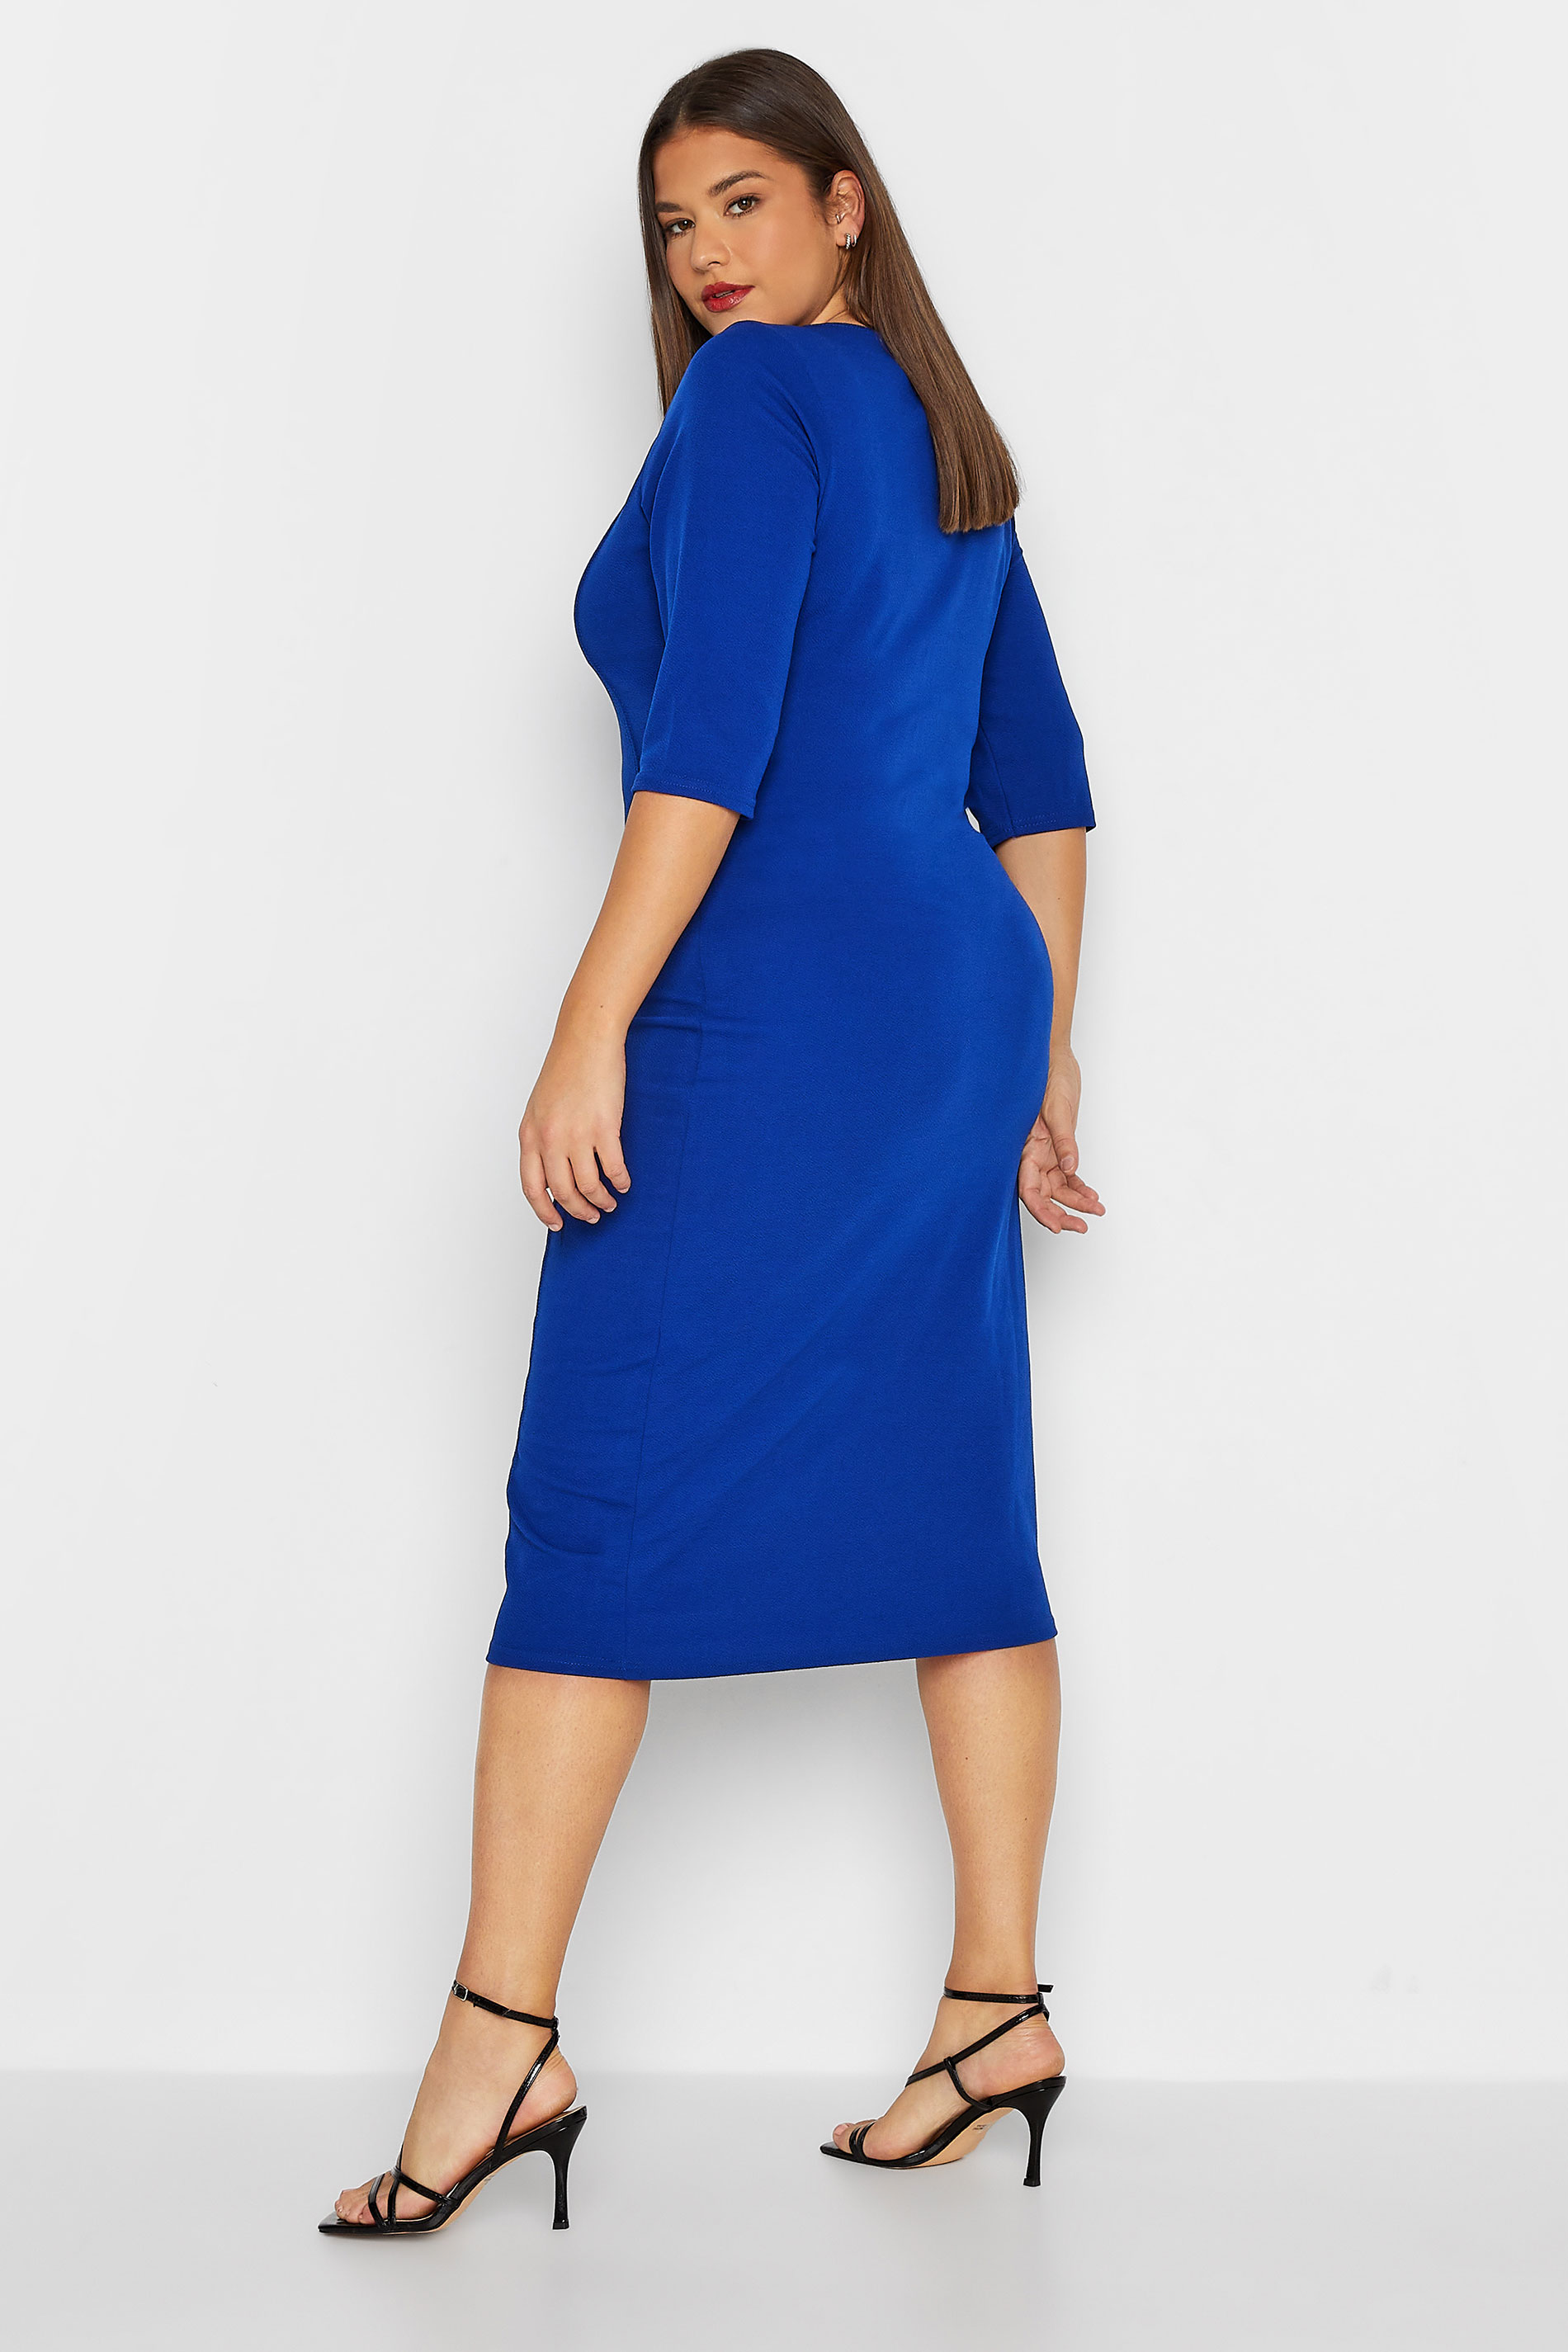 Tall Women's LTS Bright Cobalt Blue Notch Neck Midi Dress | Long Tall Sally 3